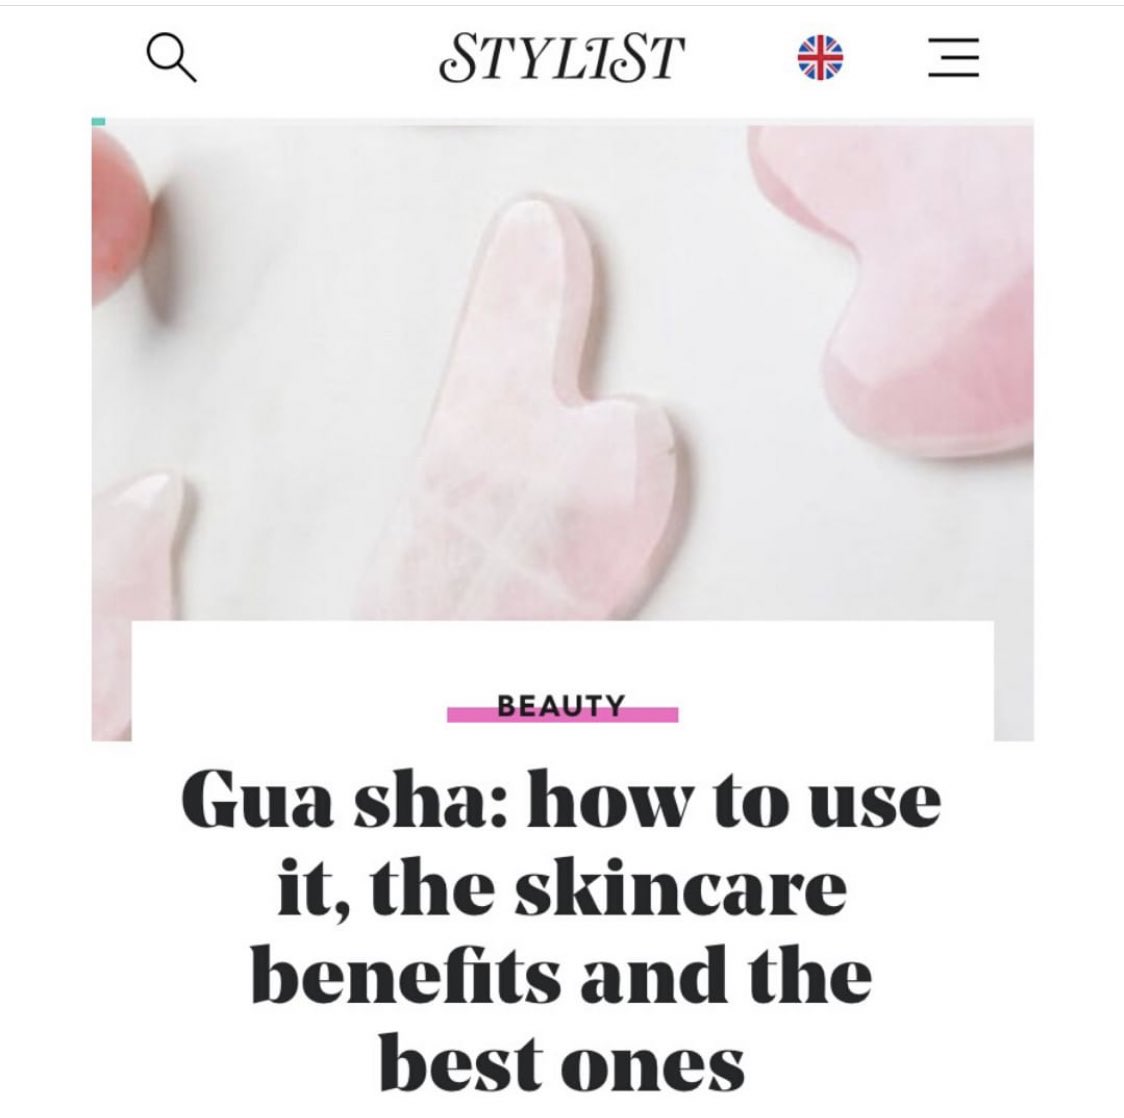 The best Gua Sha? @OilixiaSkincare of course! As recommended by @StylistMagazine @HannaIbraheem 🥰 #beauty #beautytools #facialmassage #guasha #massage #wellbeing #rosequartz #freelance #pr